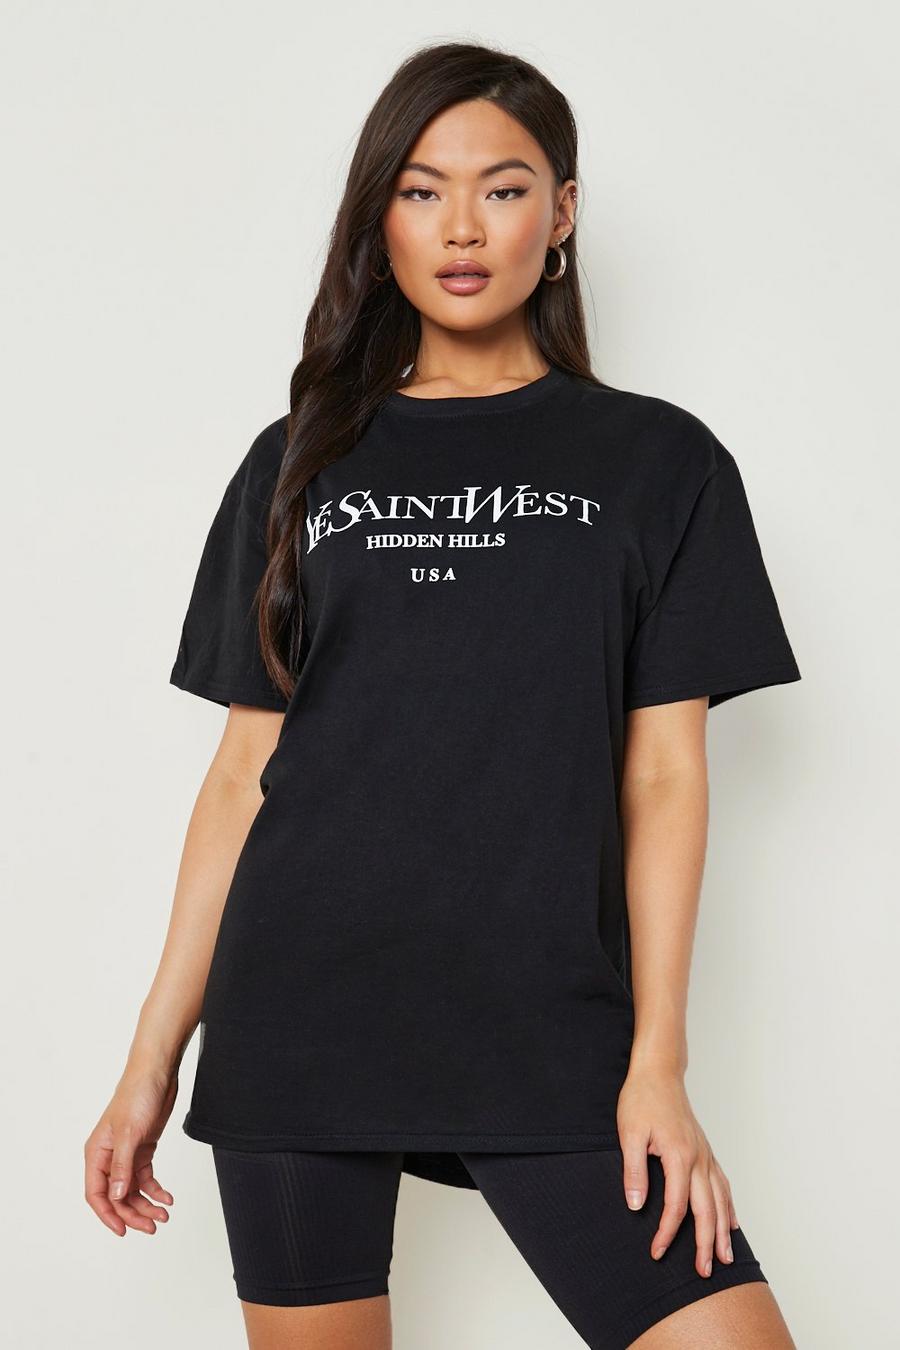 T-shirt oversize 'Ye Saint West', Black noir